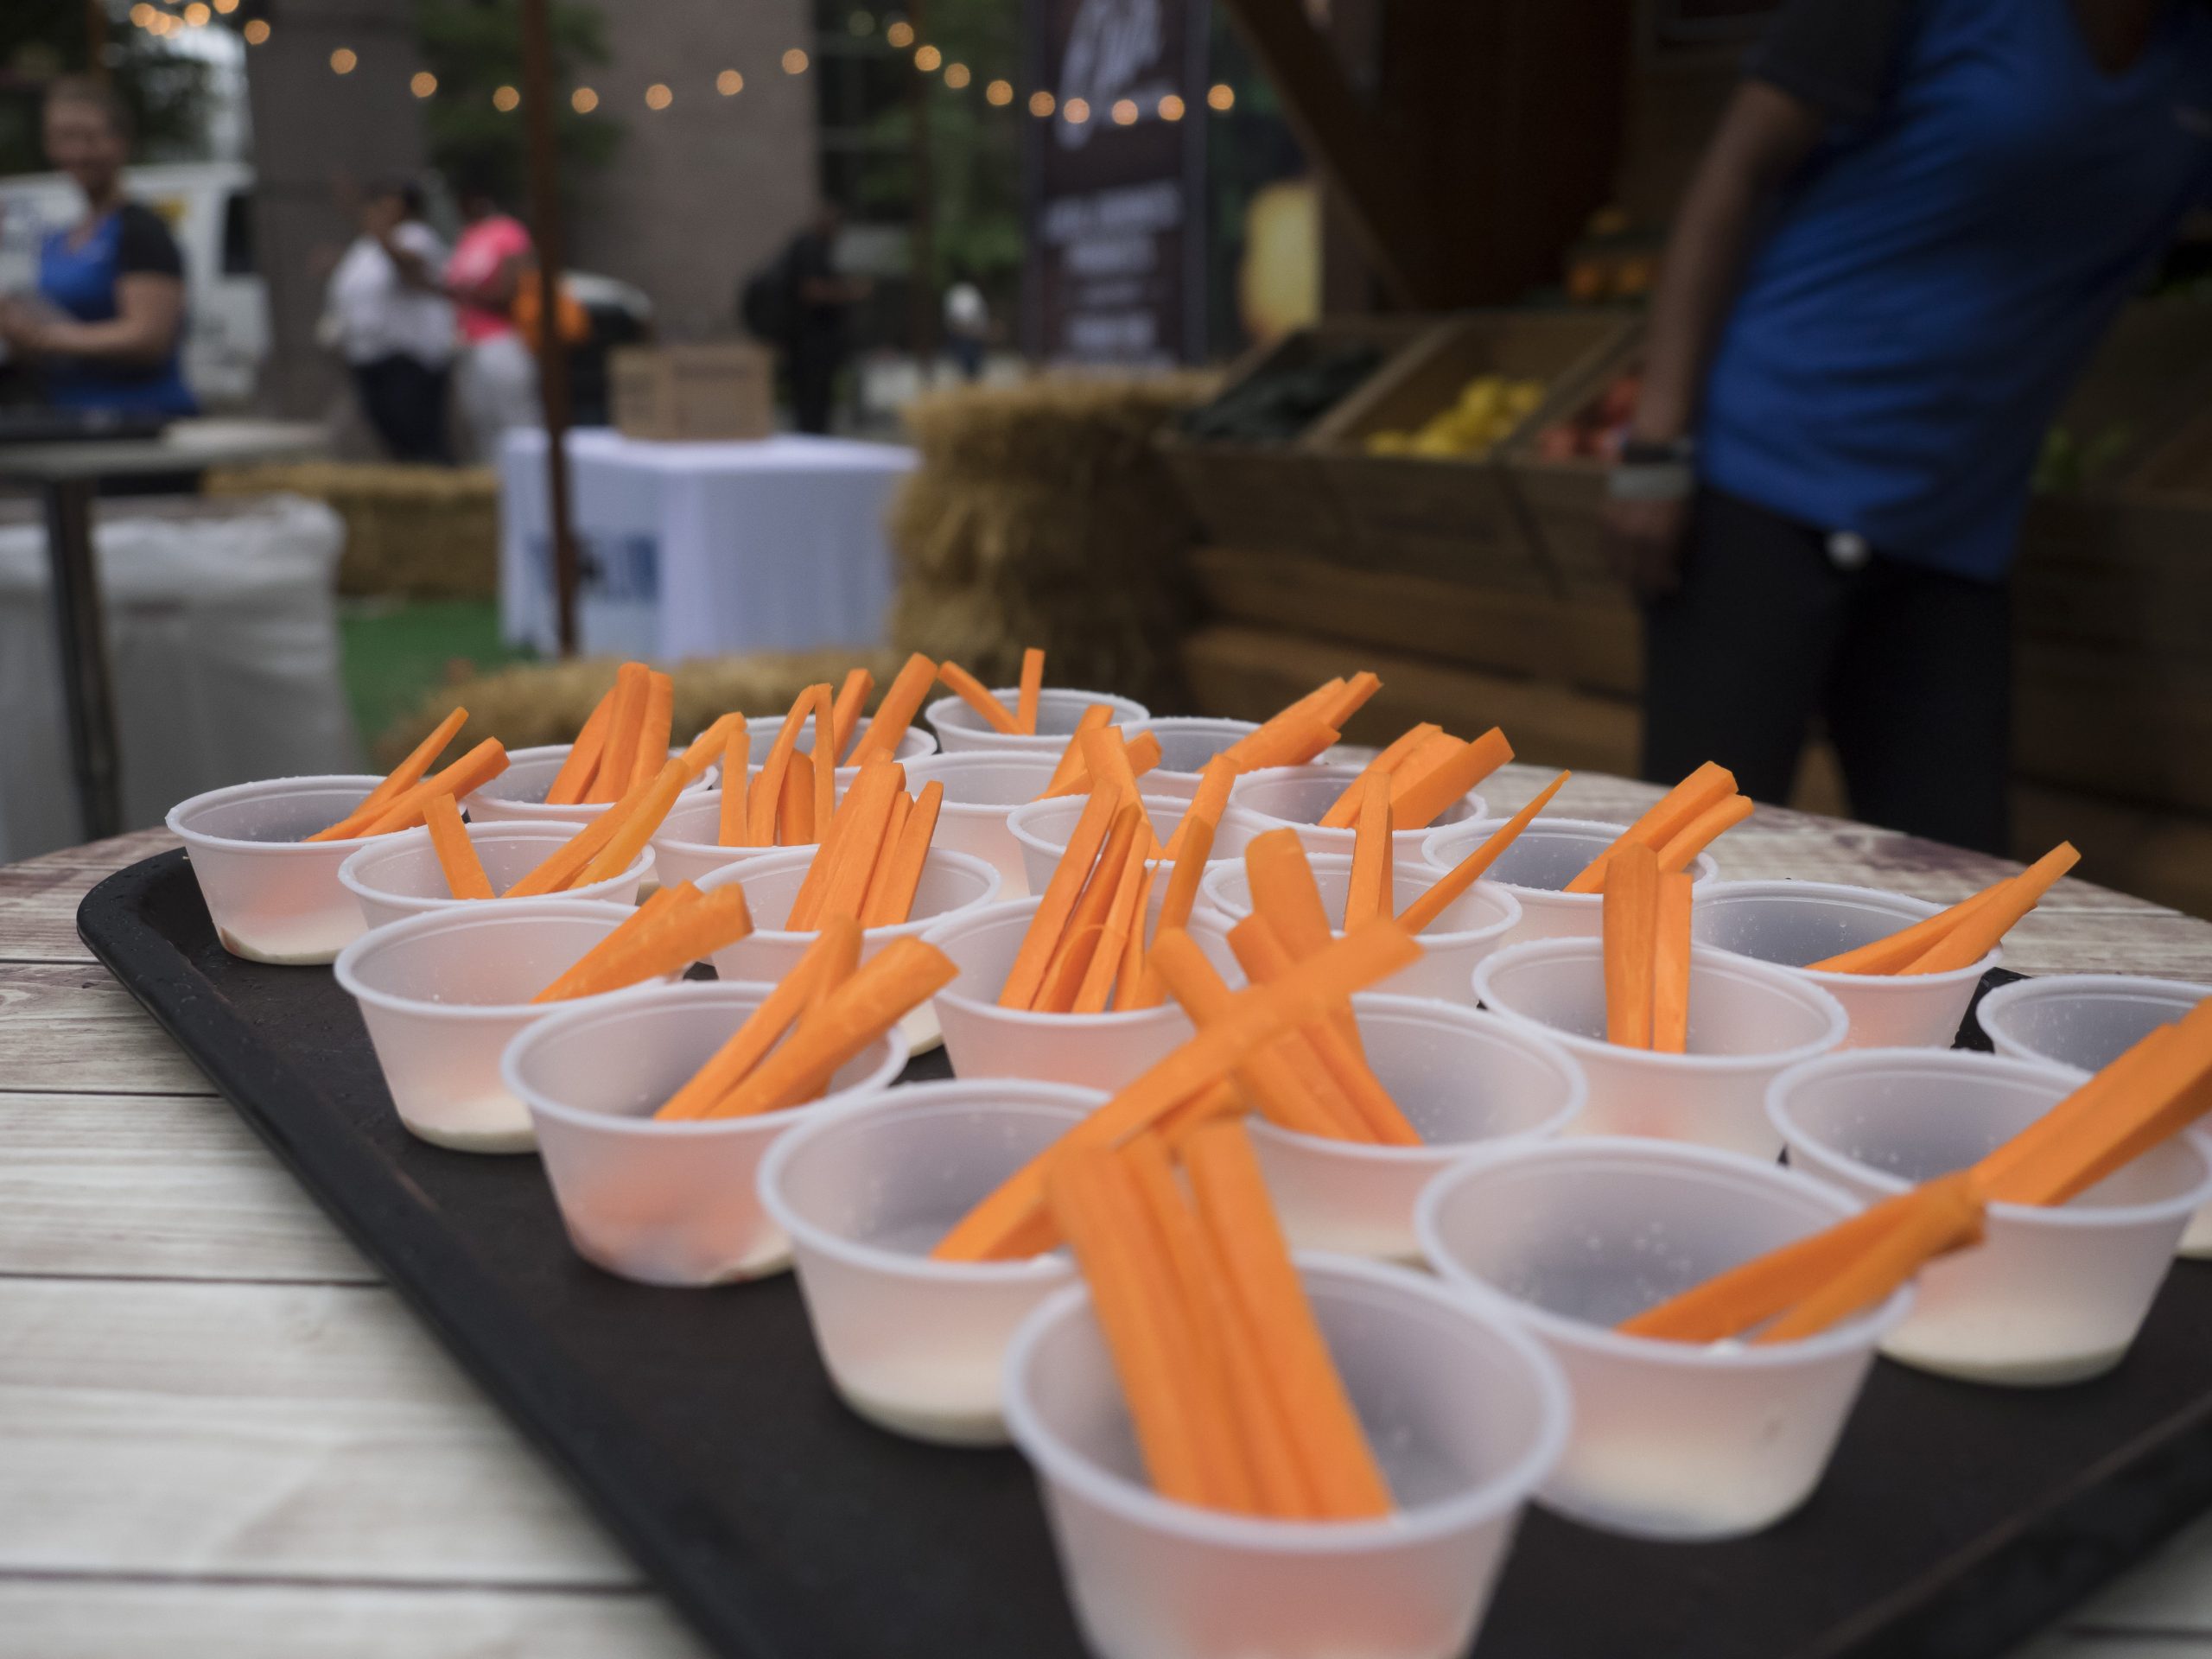 Food Lion 2019 - carrot sticks